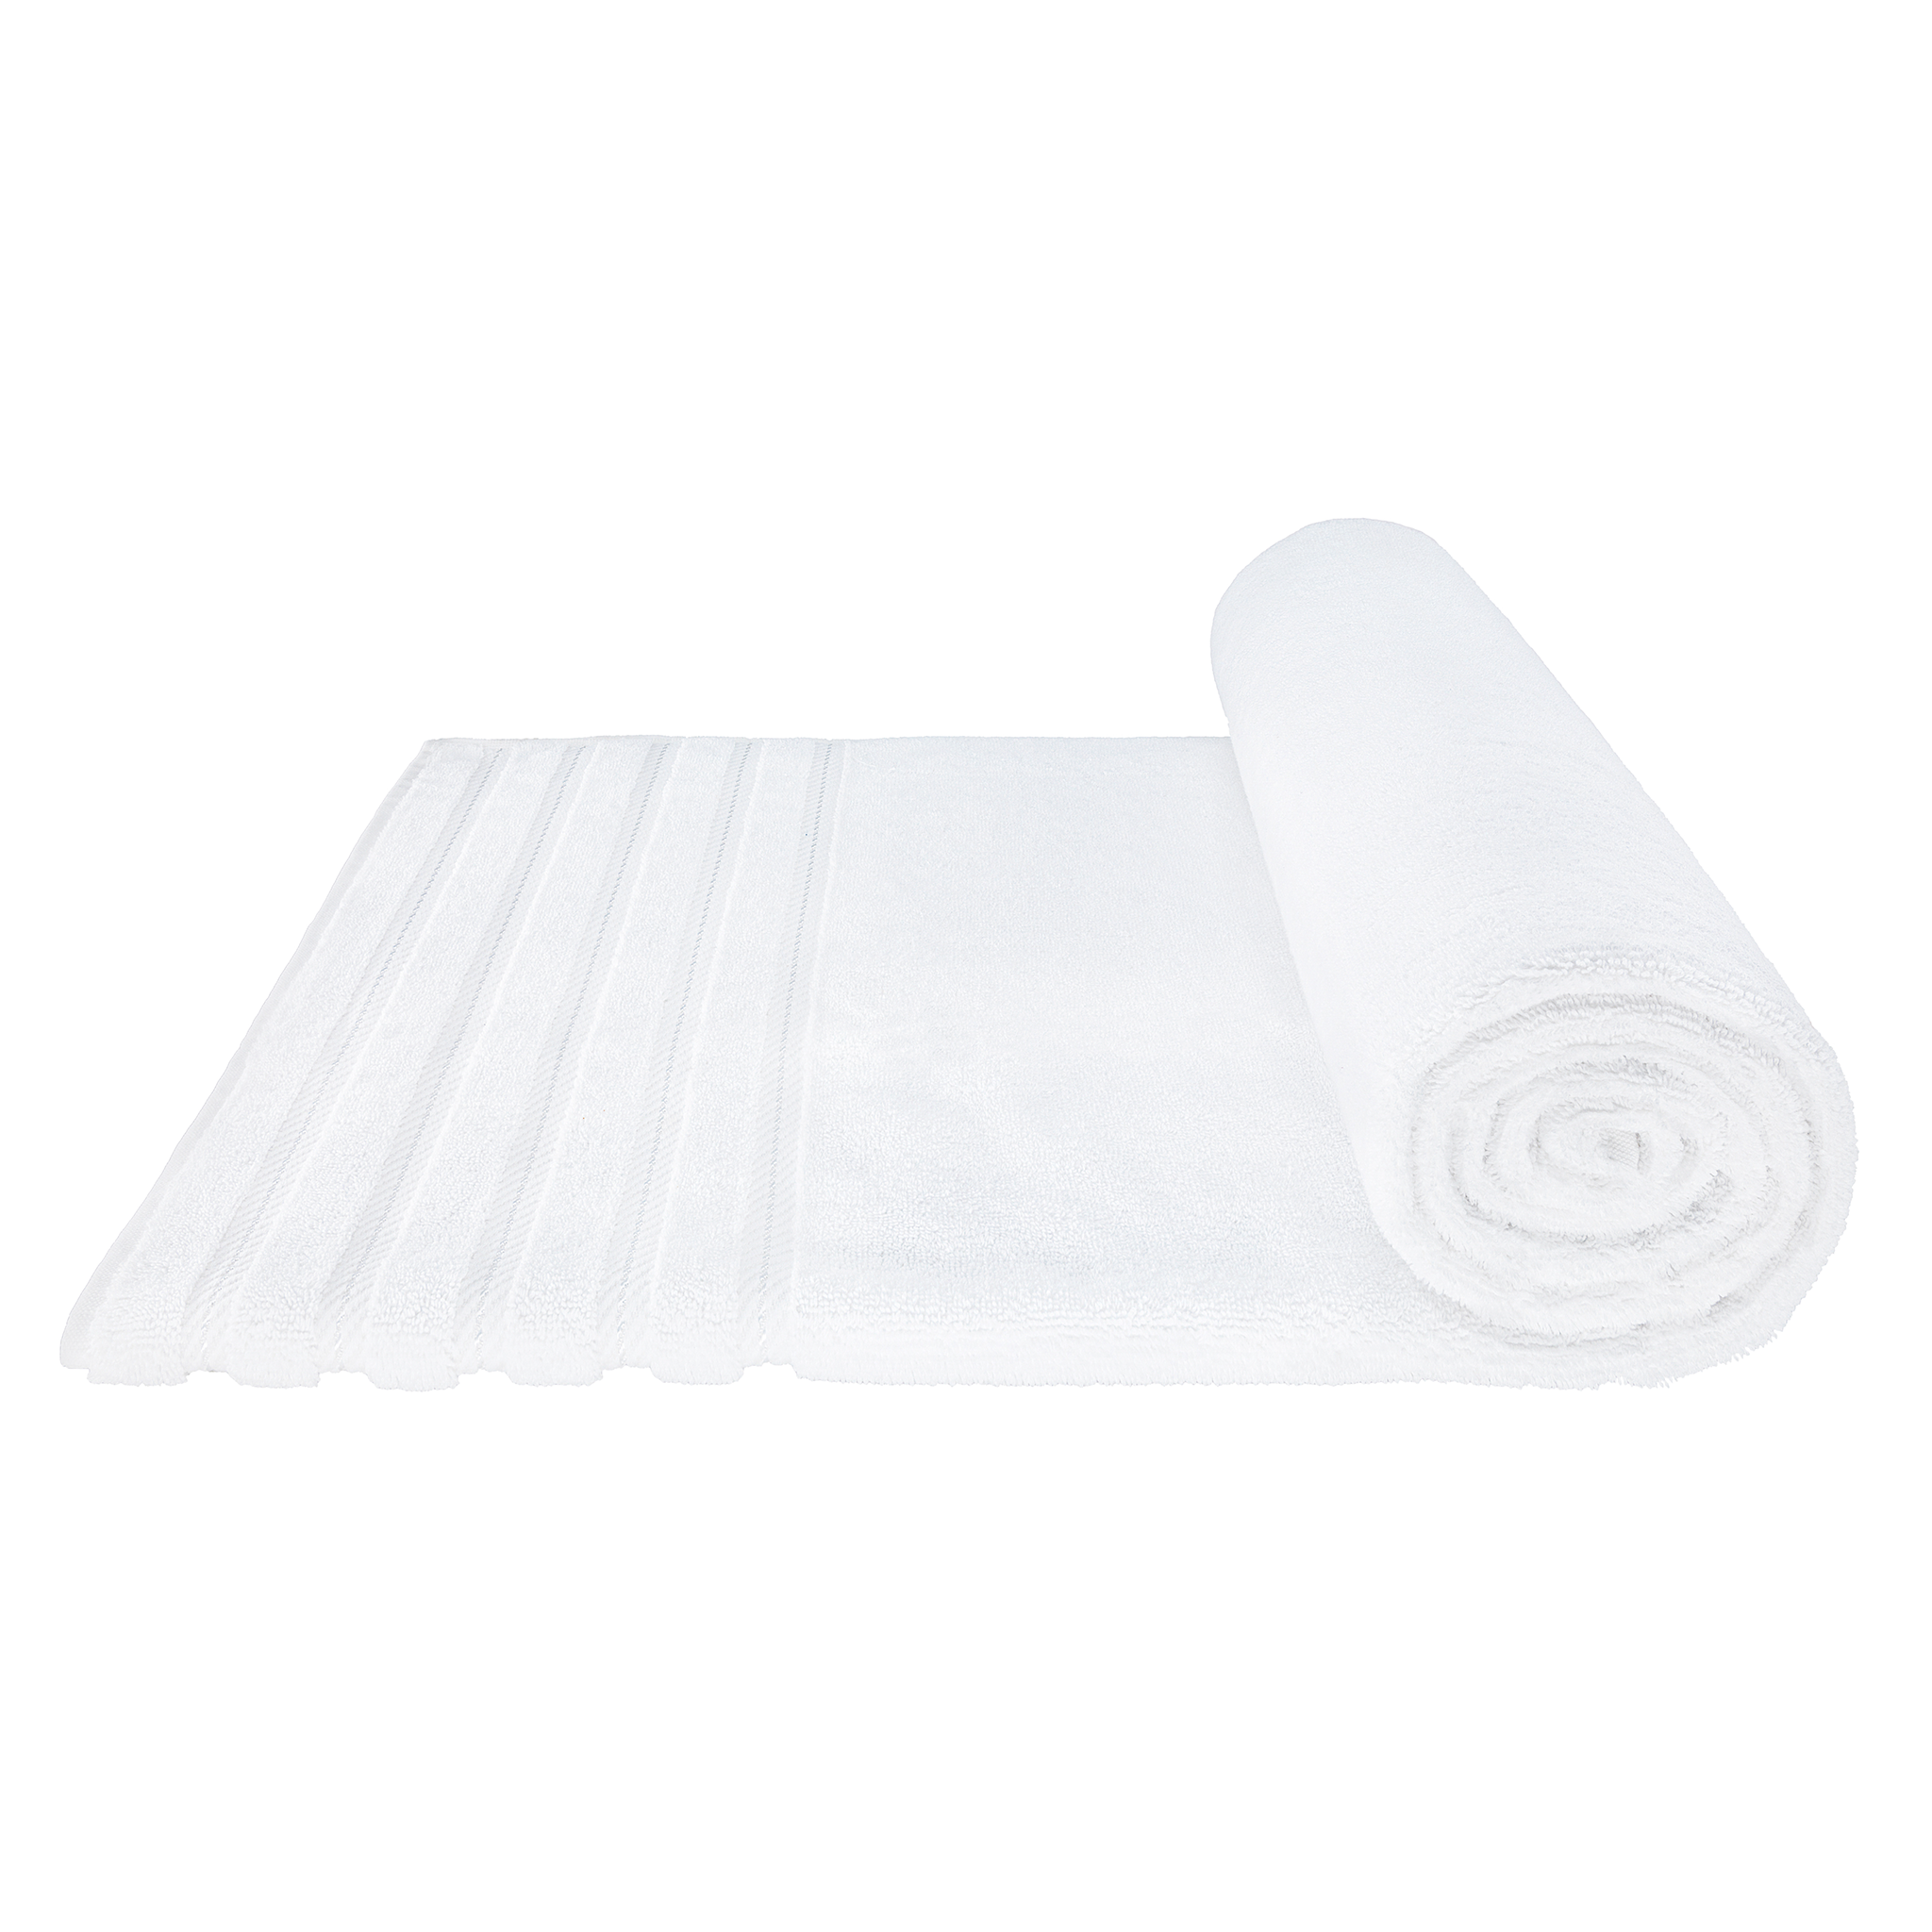 American Soft Linen - 35x70 Jumbo Bath Sheet Turkish Bath Towel - 16 Piece Case Pack - White - 6